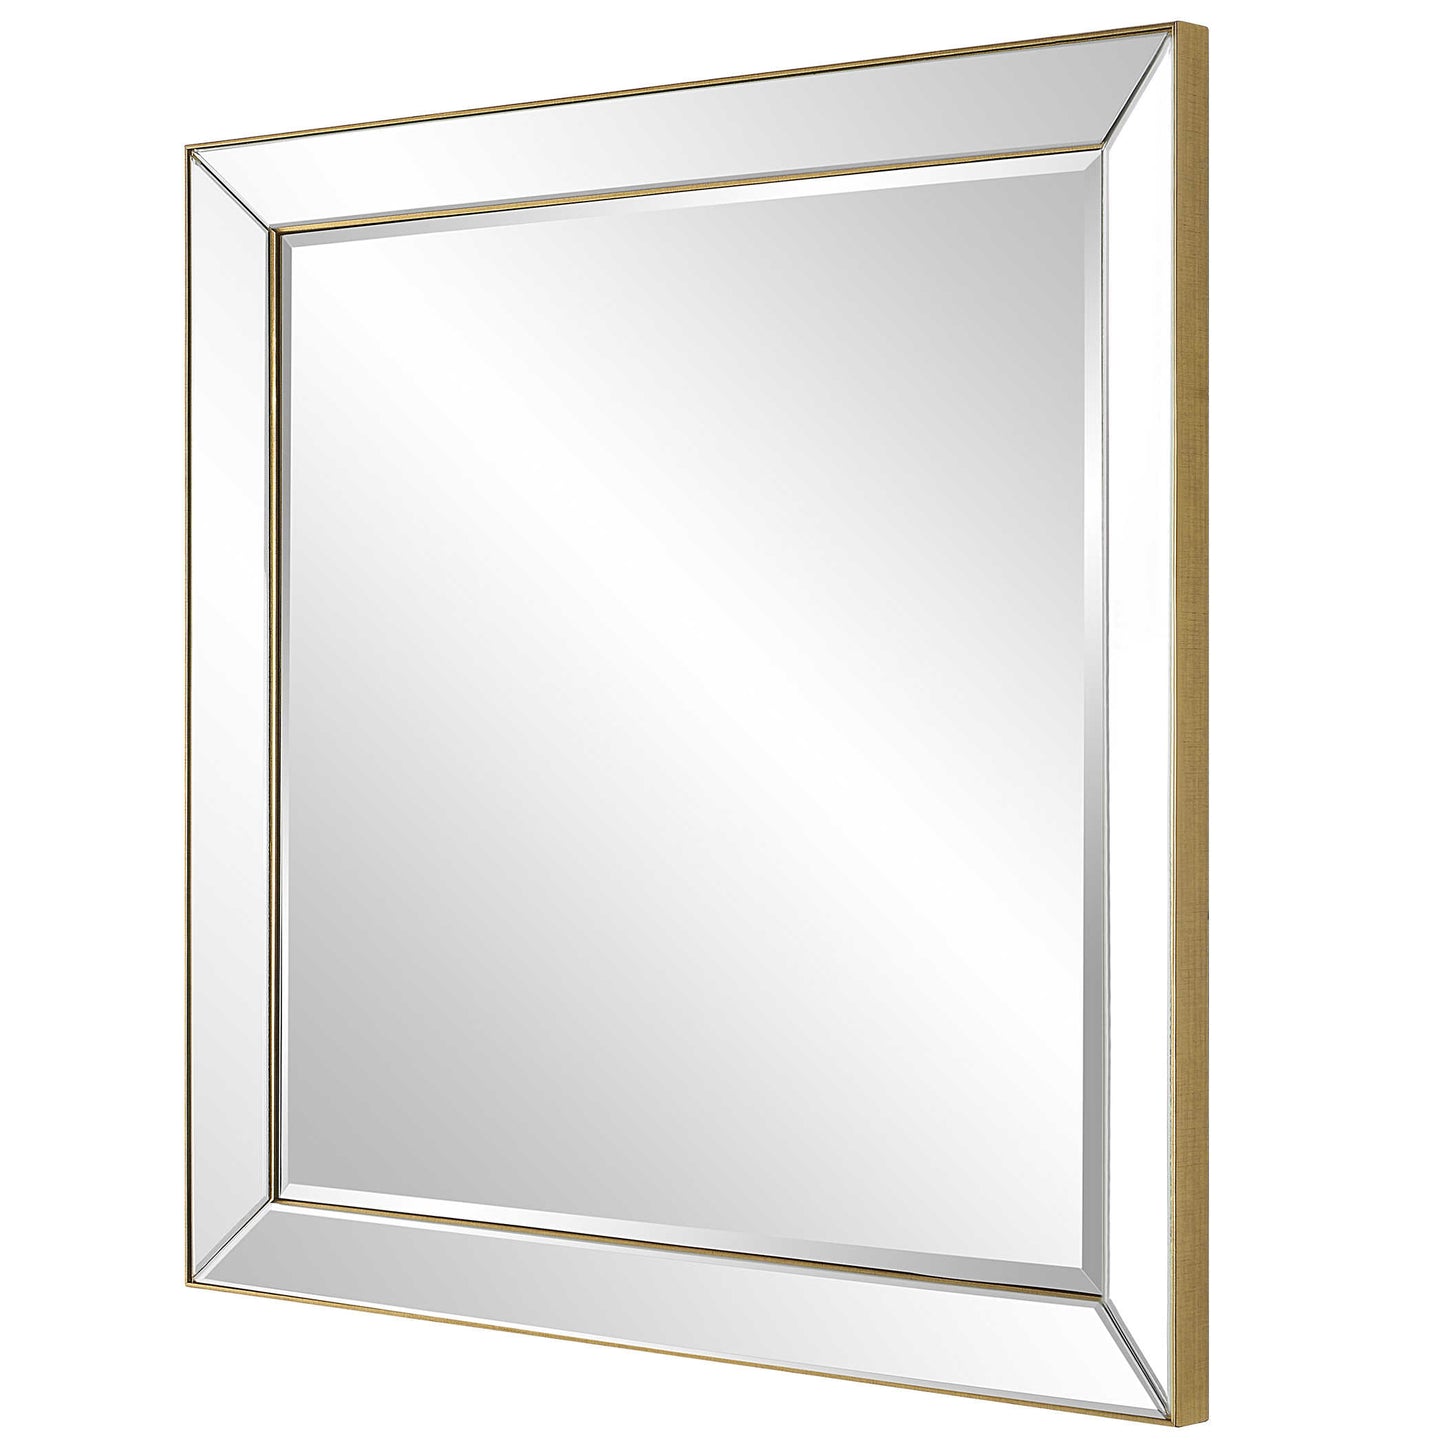 Uttermost Lytton Square Mirror, Gold 09891